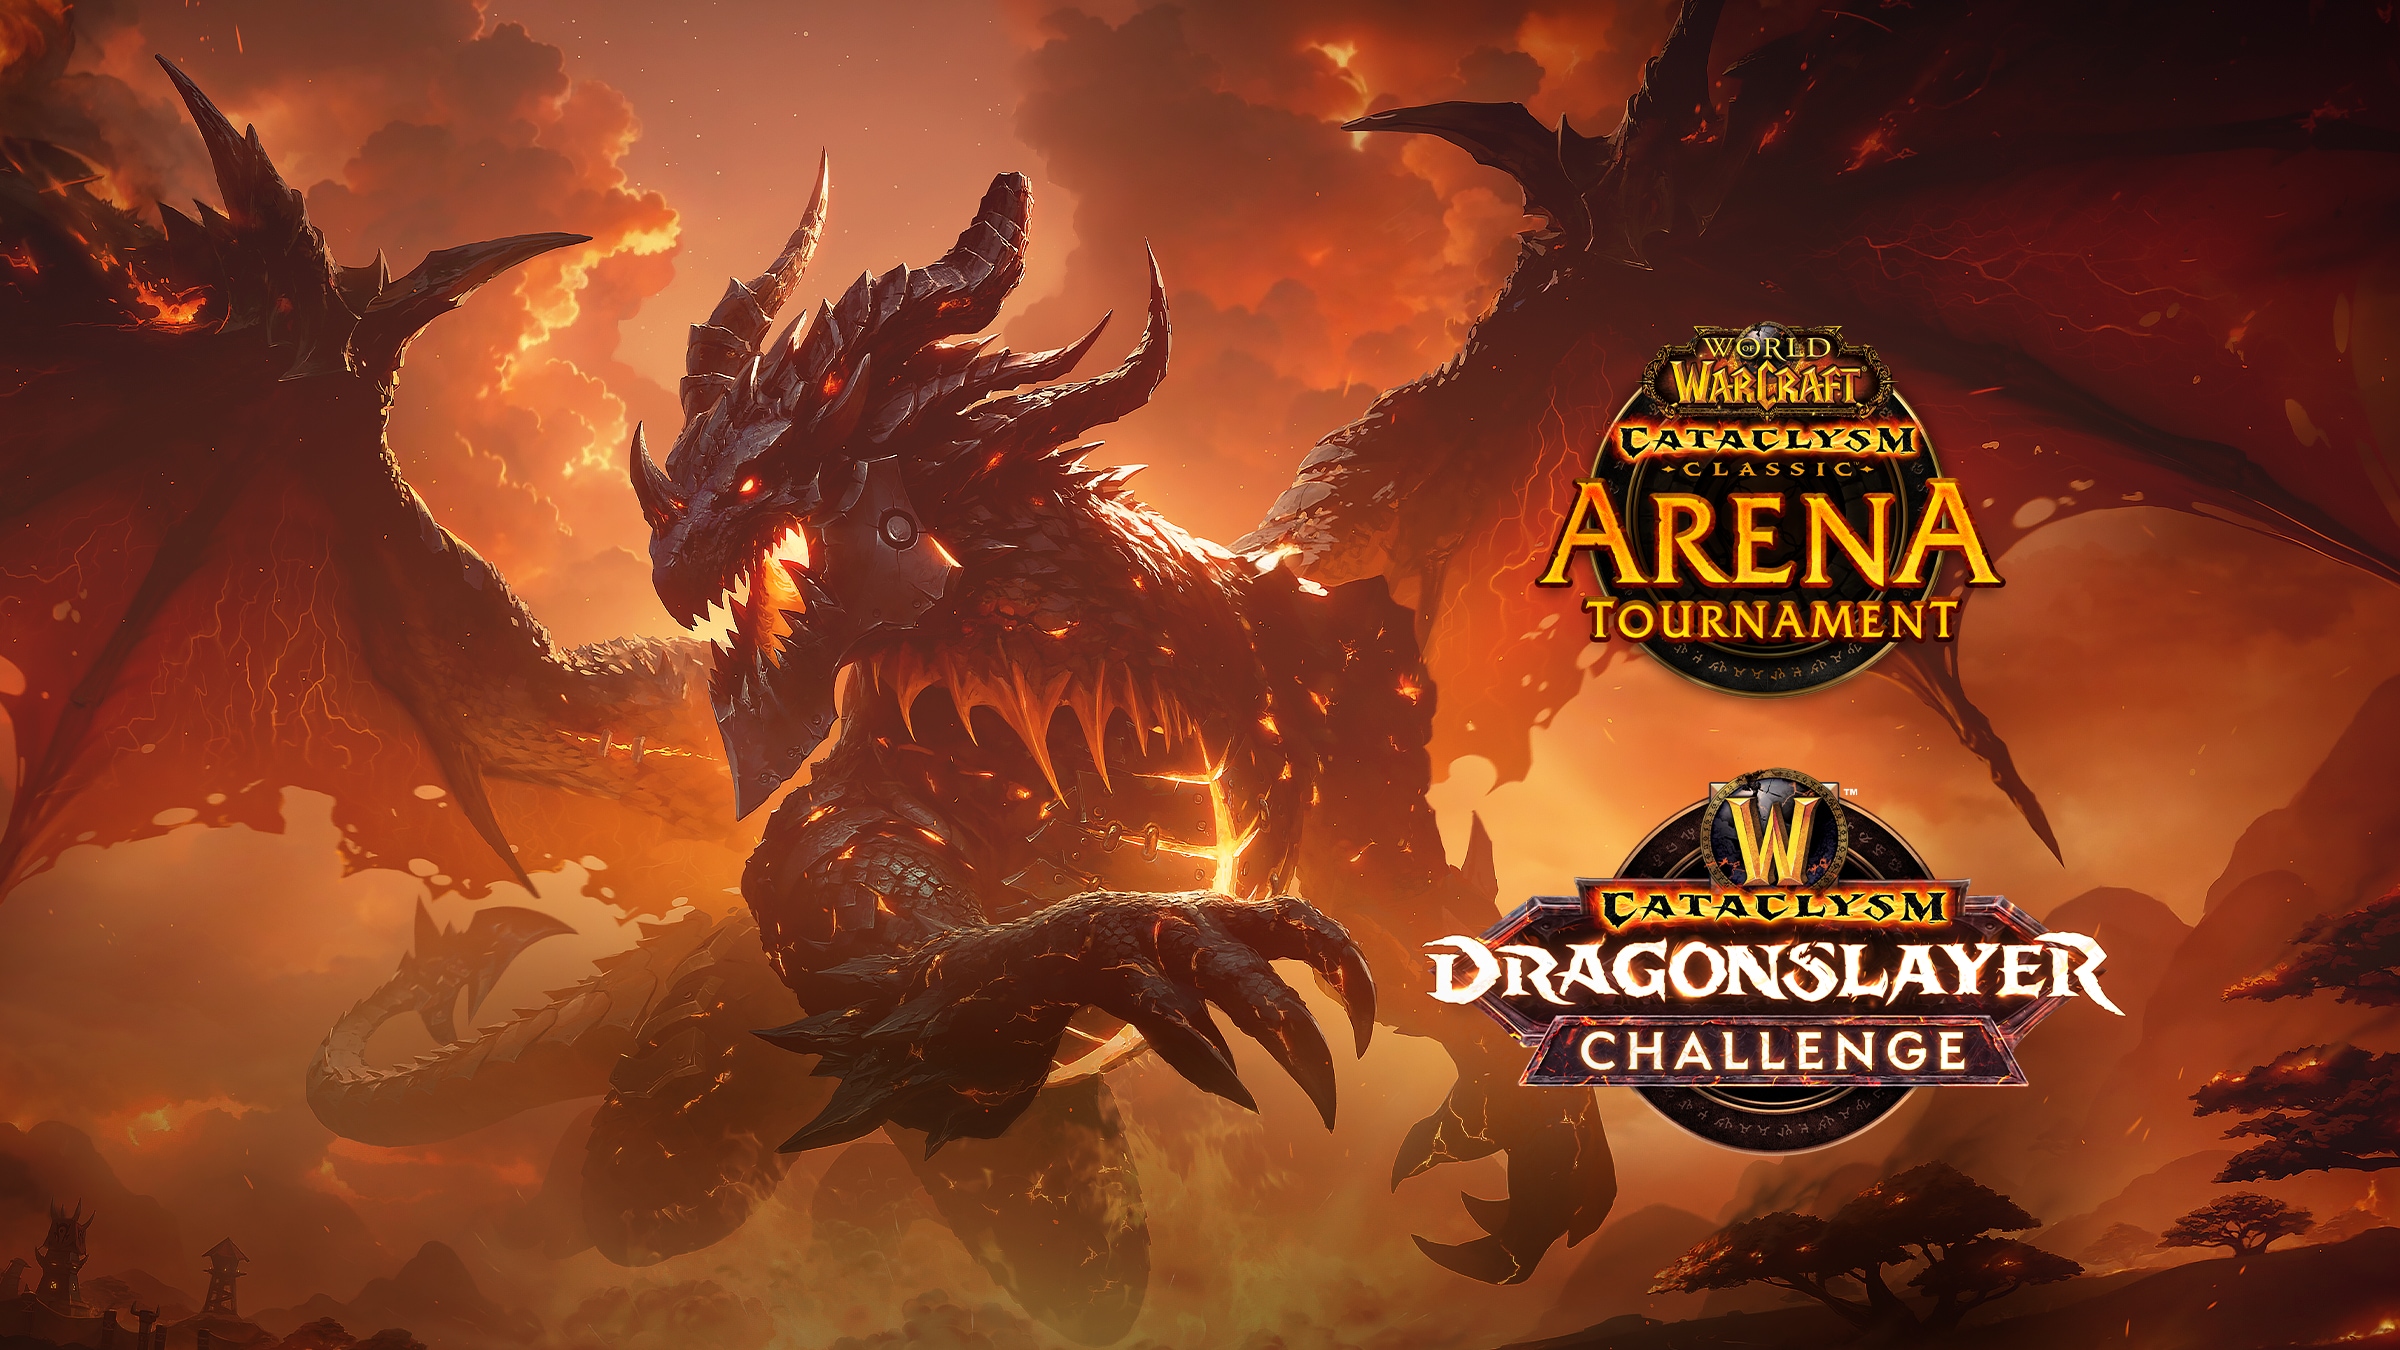 ¡Dragonslayer Challenge y Cataclysm Arena Tournament están aquí!